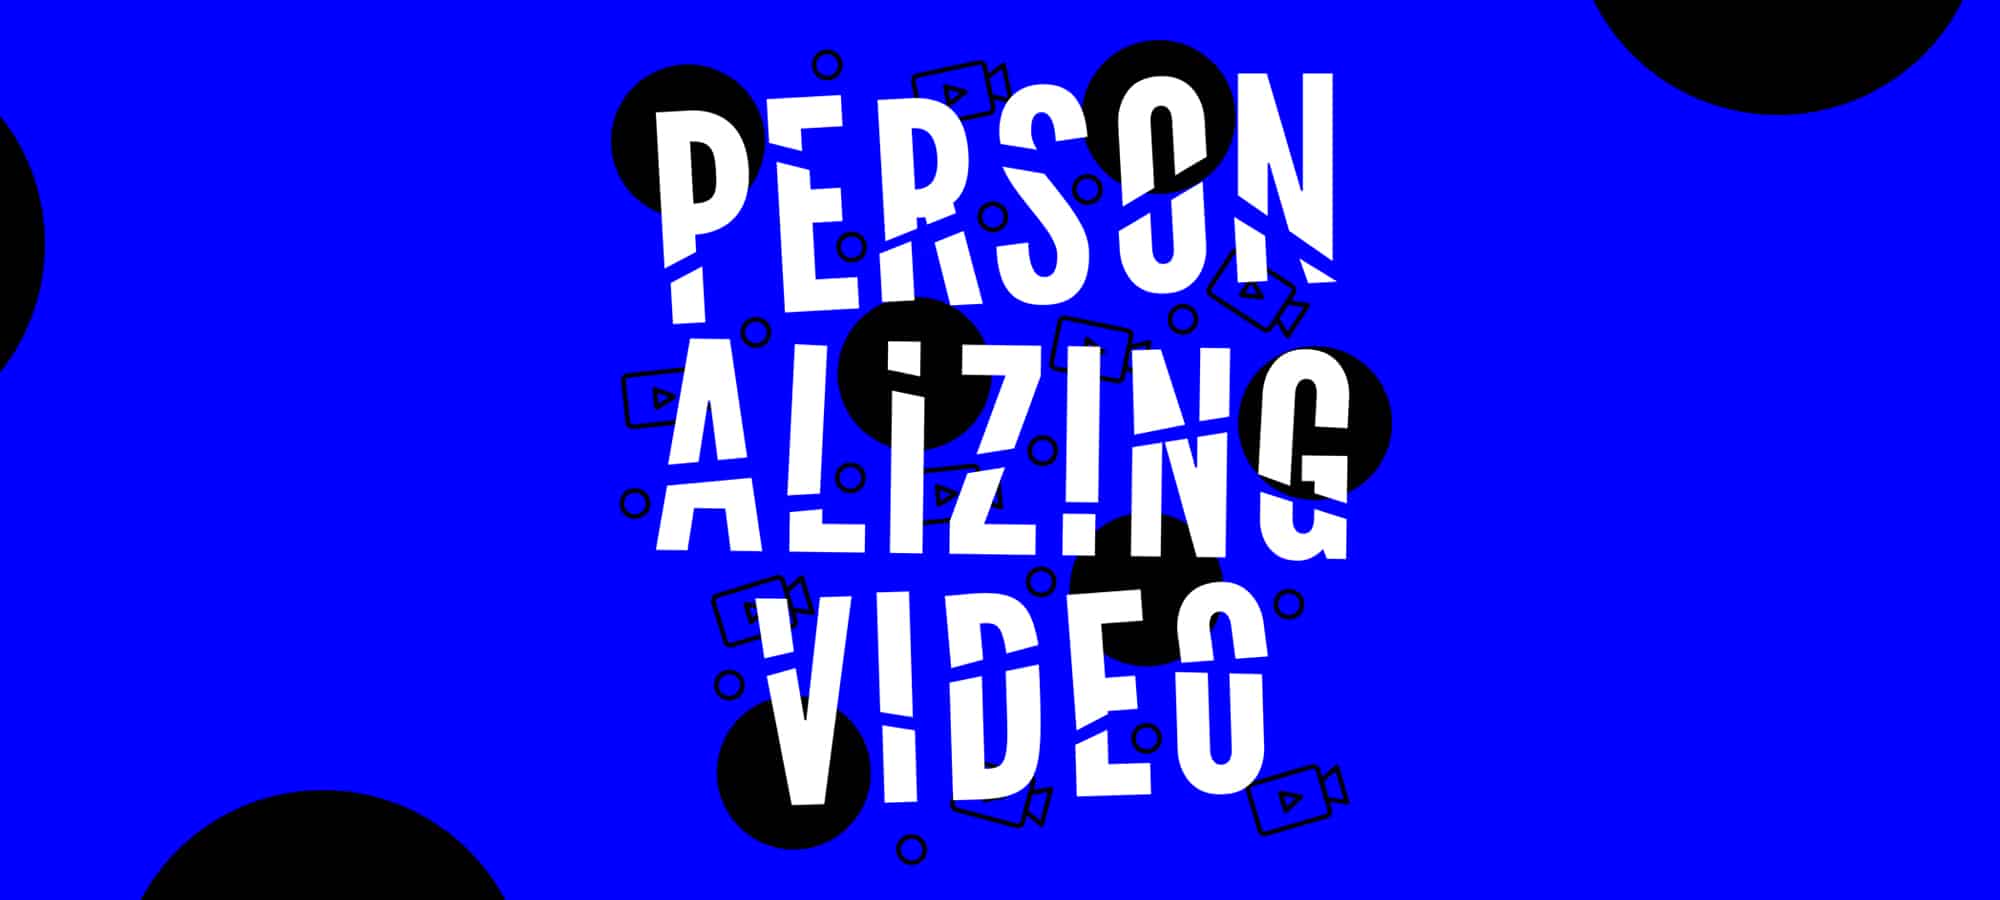 personalizing-Video